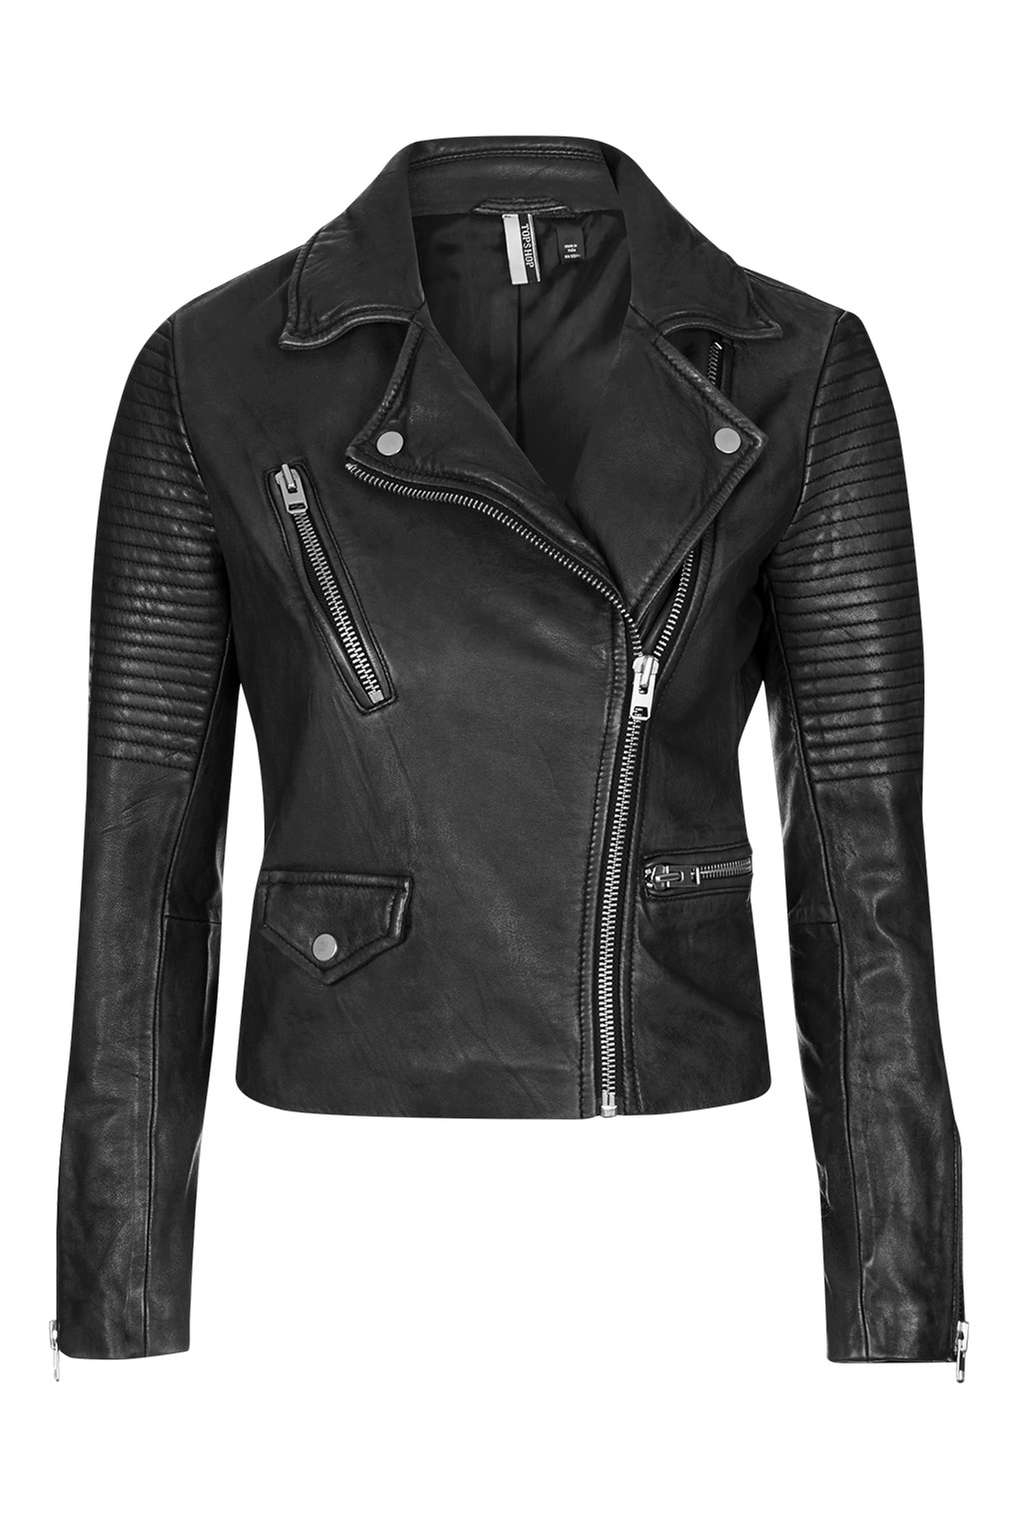 TOPSHOP Tall Leather Biker Jacket in Black - Lyst